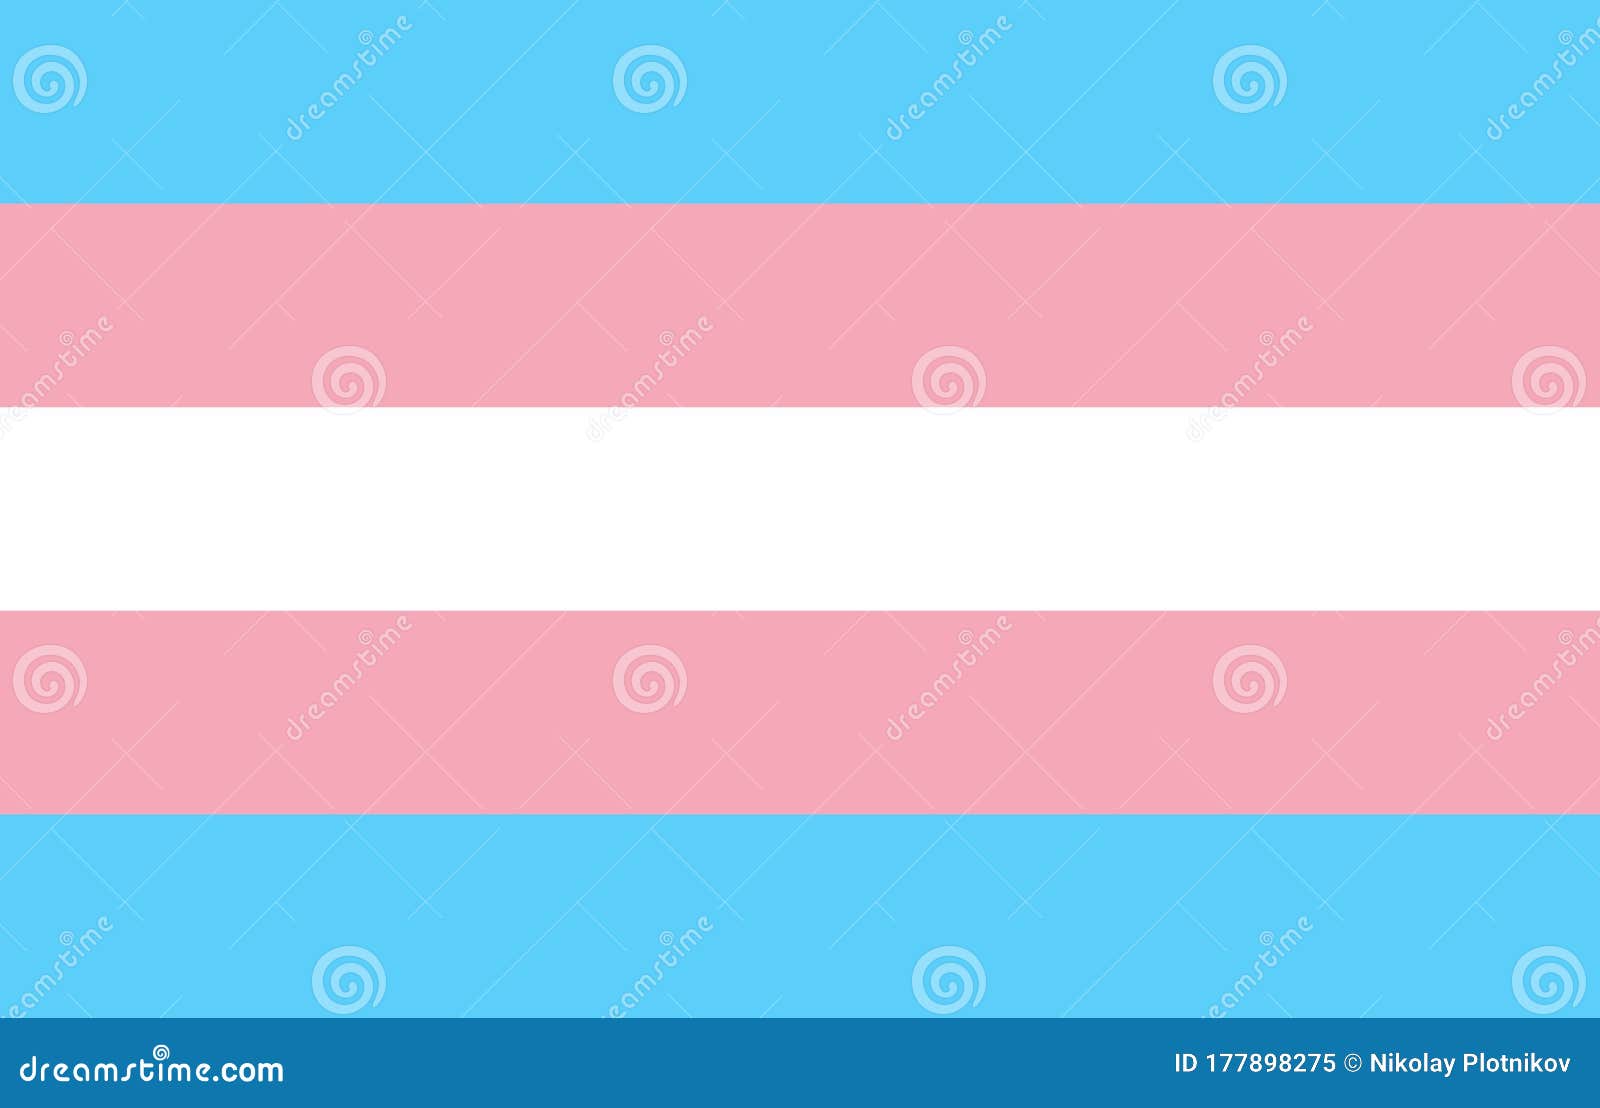 Transgender Pride Community Flag Lgbt Symbol Sexual